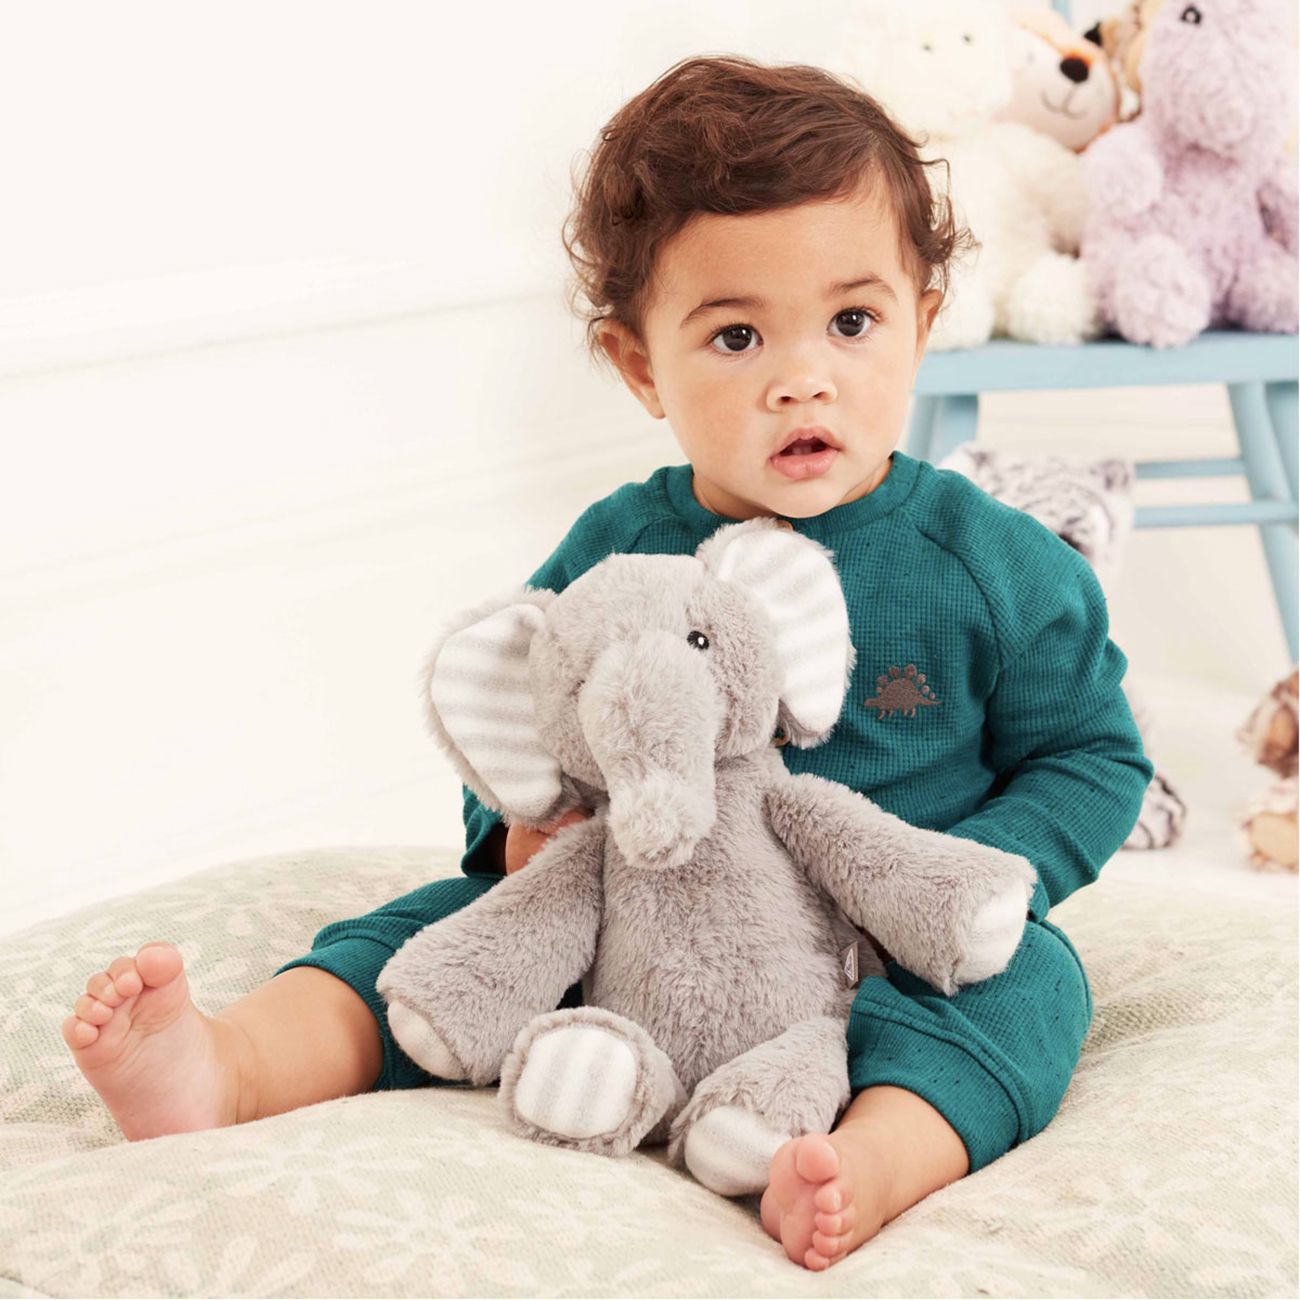 Baby with elephant plush toy.